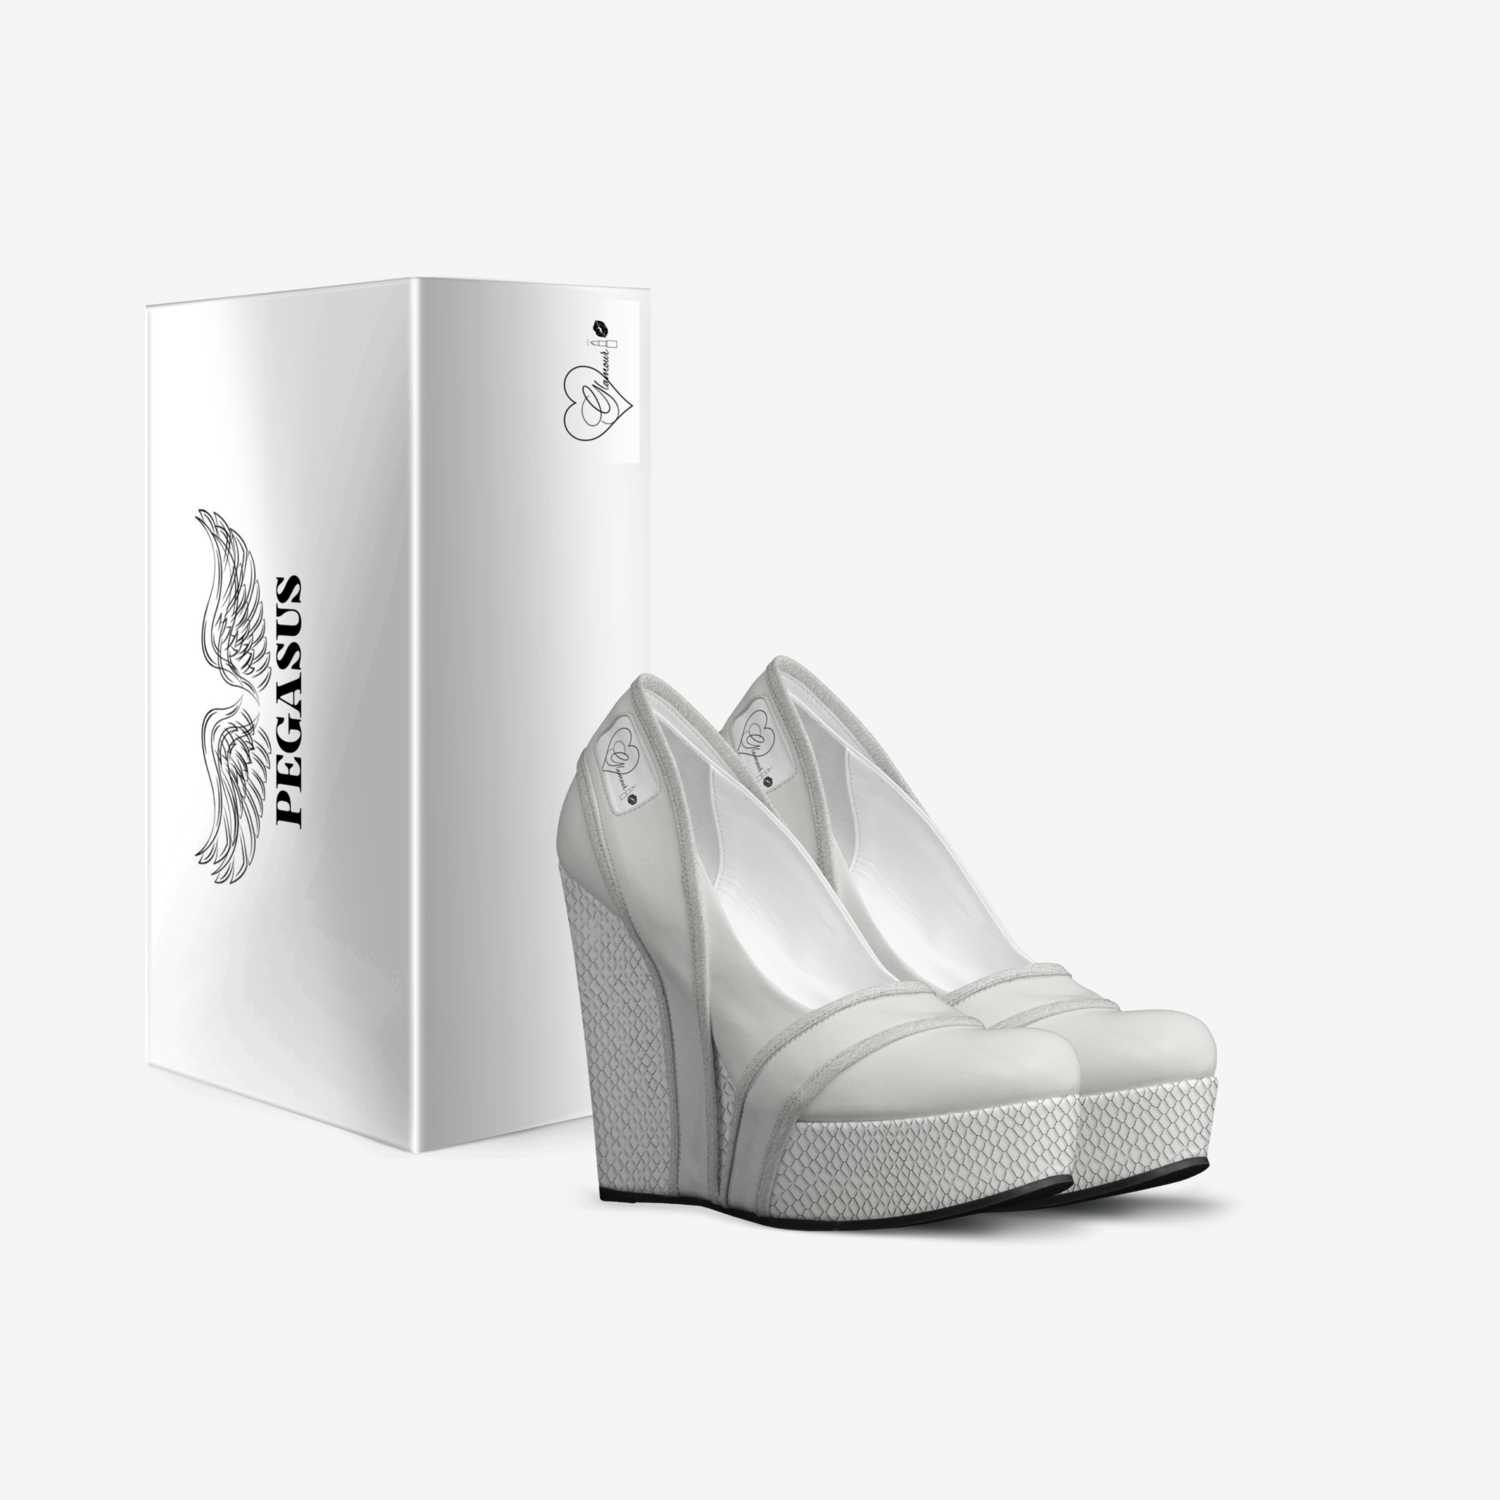 Glamor  custom made in Italy shoes by Austin Kerkula | Box view